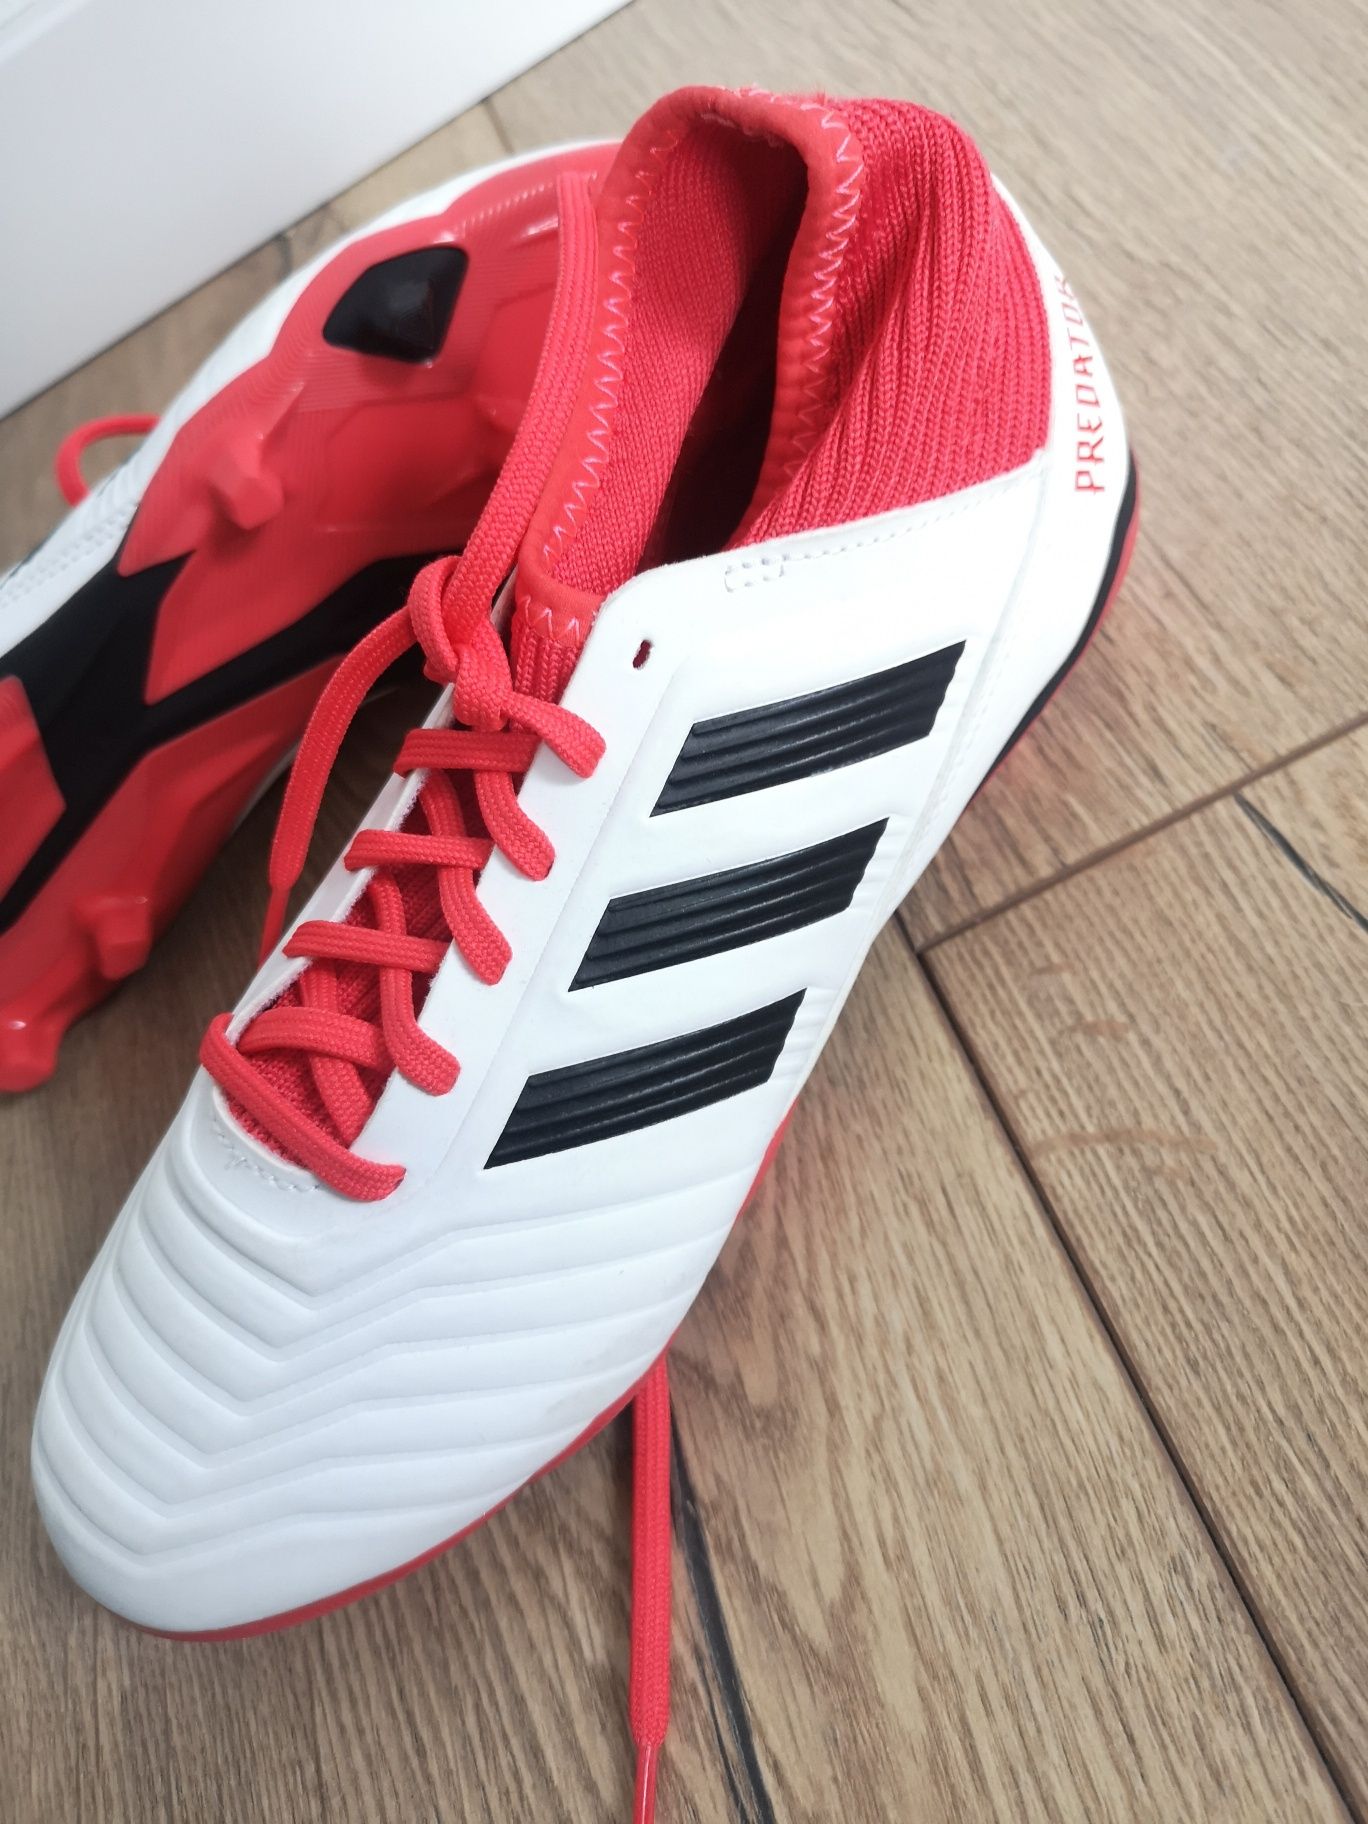 Buty piłkarskie korki Predator 18.3 FG Junior Adidas rozmiar UK 5